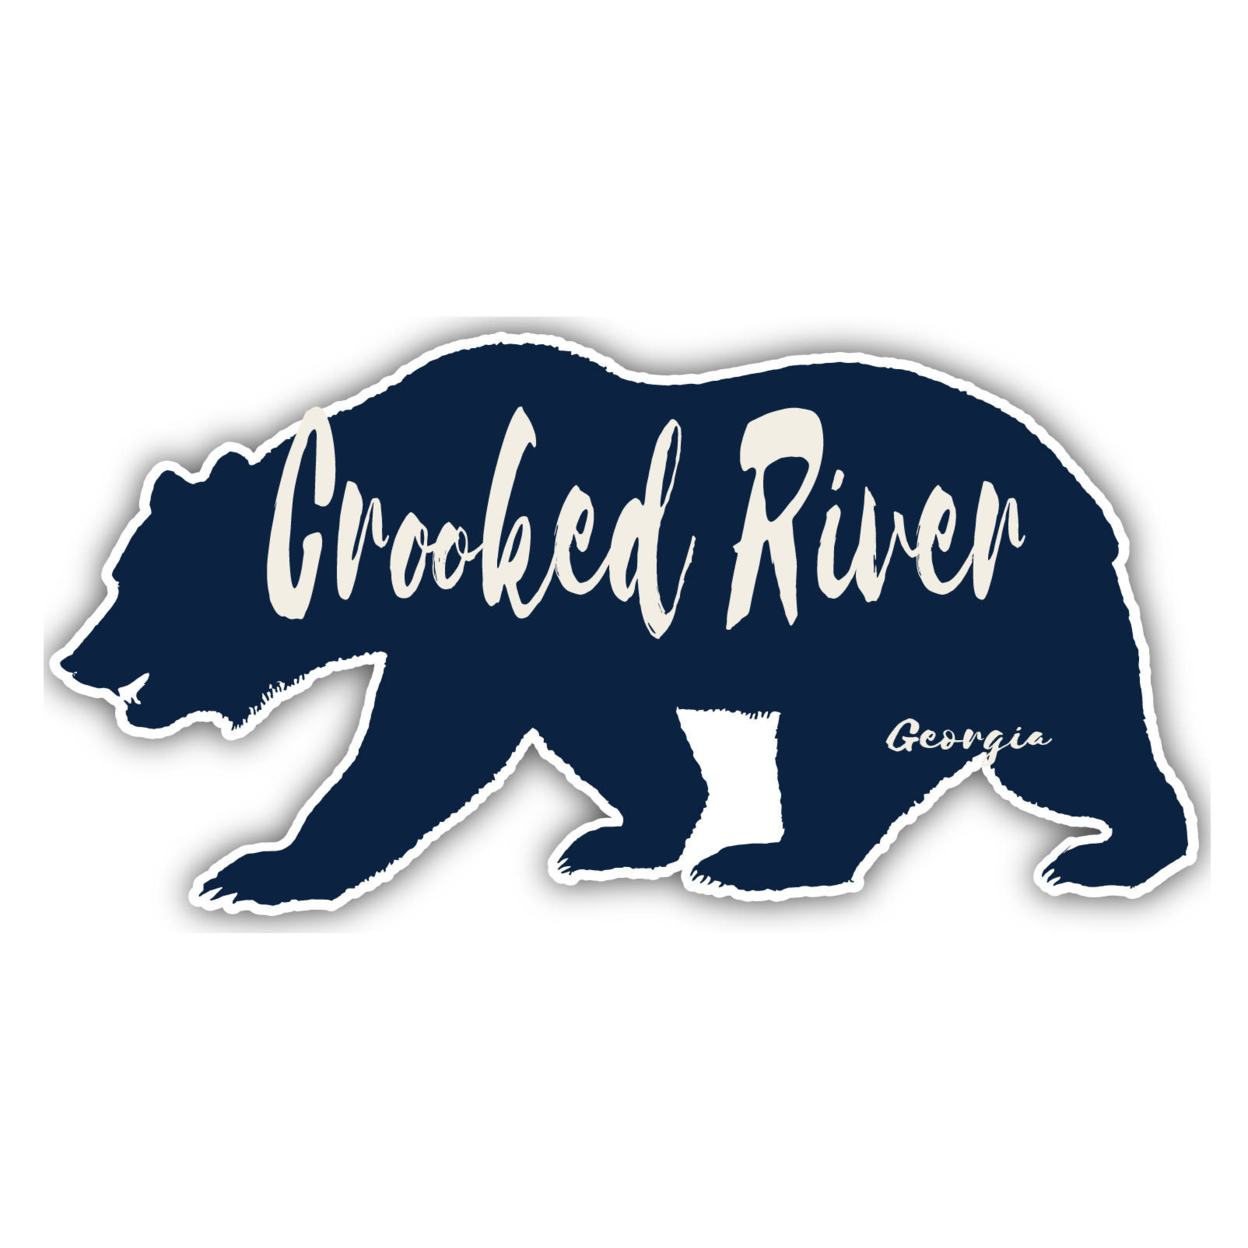 Crooked River Georgia Souvenir Decorative Stickers (Choose Theme And Size) - Single Unit, 2-Inch, Bear